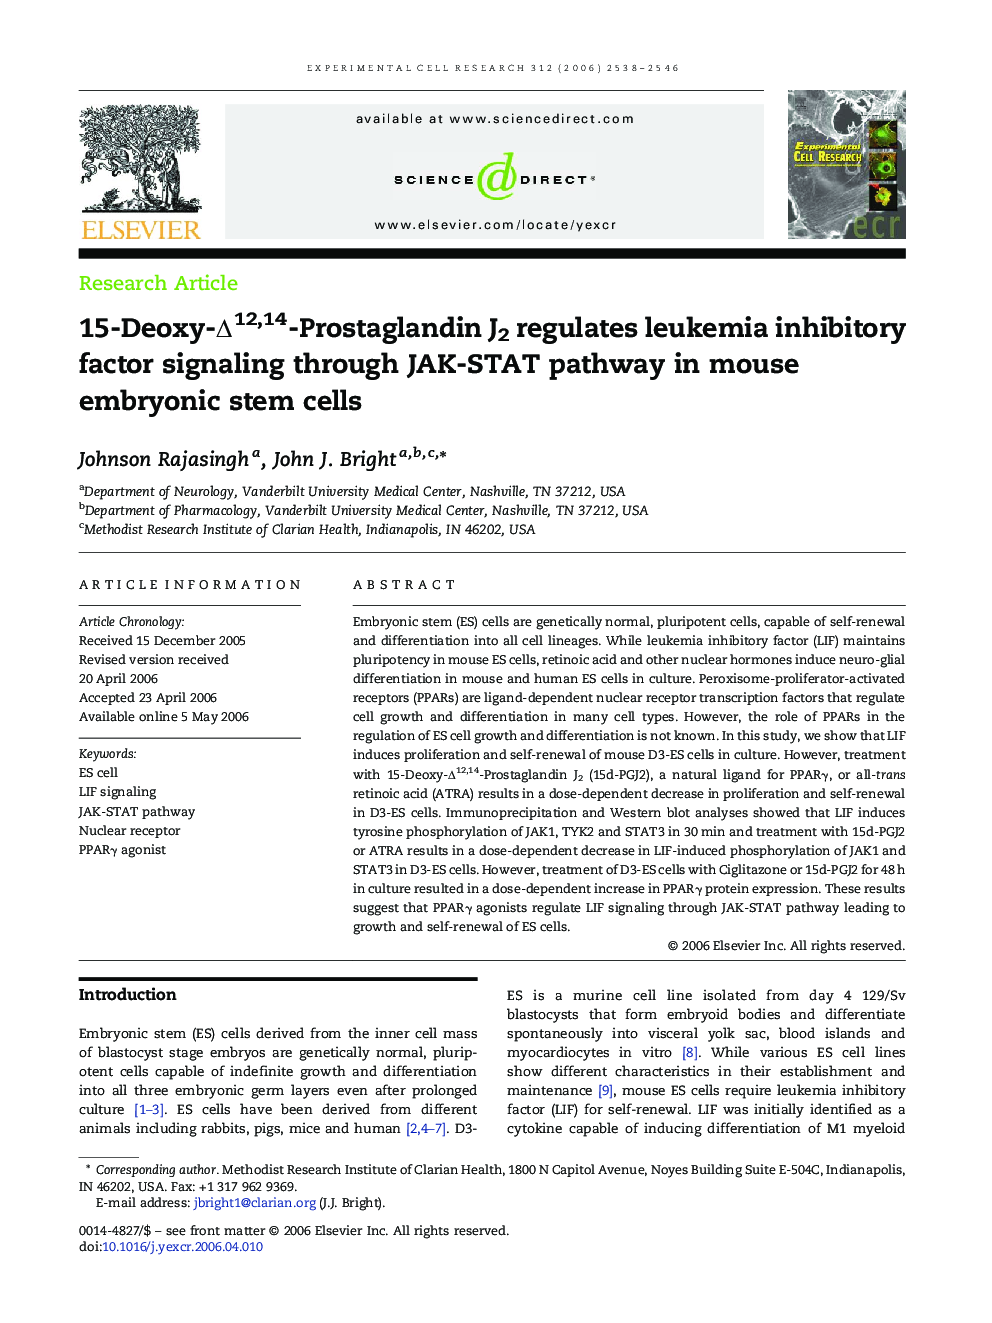 15-Deoxy-Δ12,14-Prostaglandin J2 regulates leukemia inhibitory factor signaling through JAK-STAT pathway in mouse embryonic stem cells